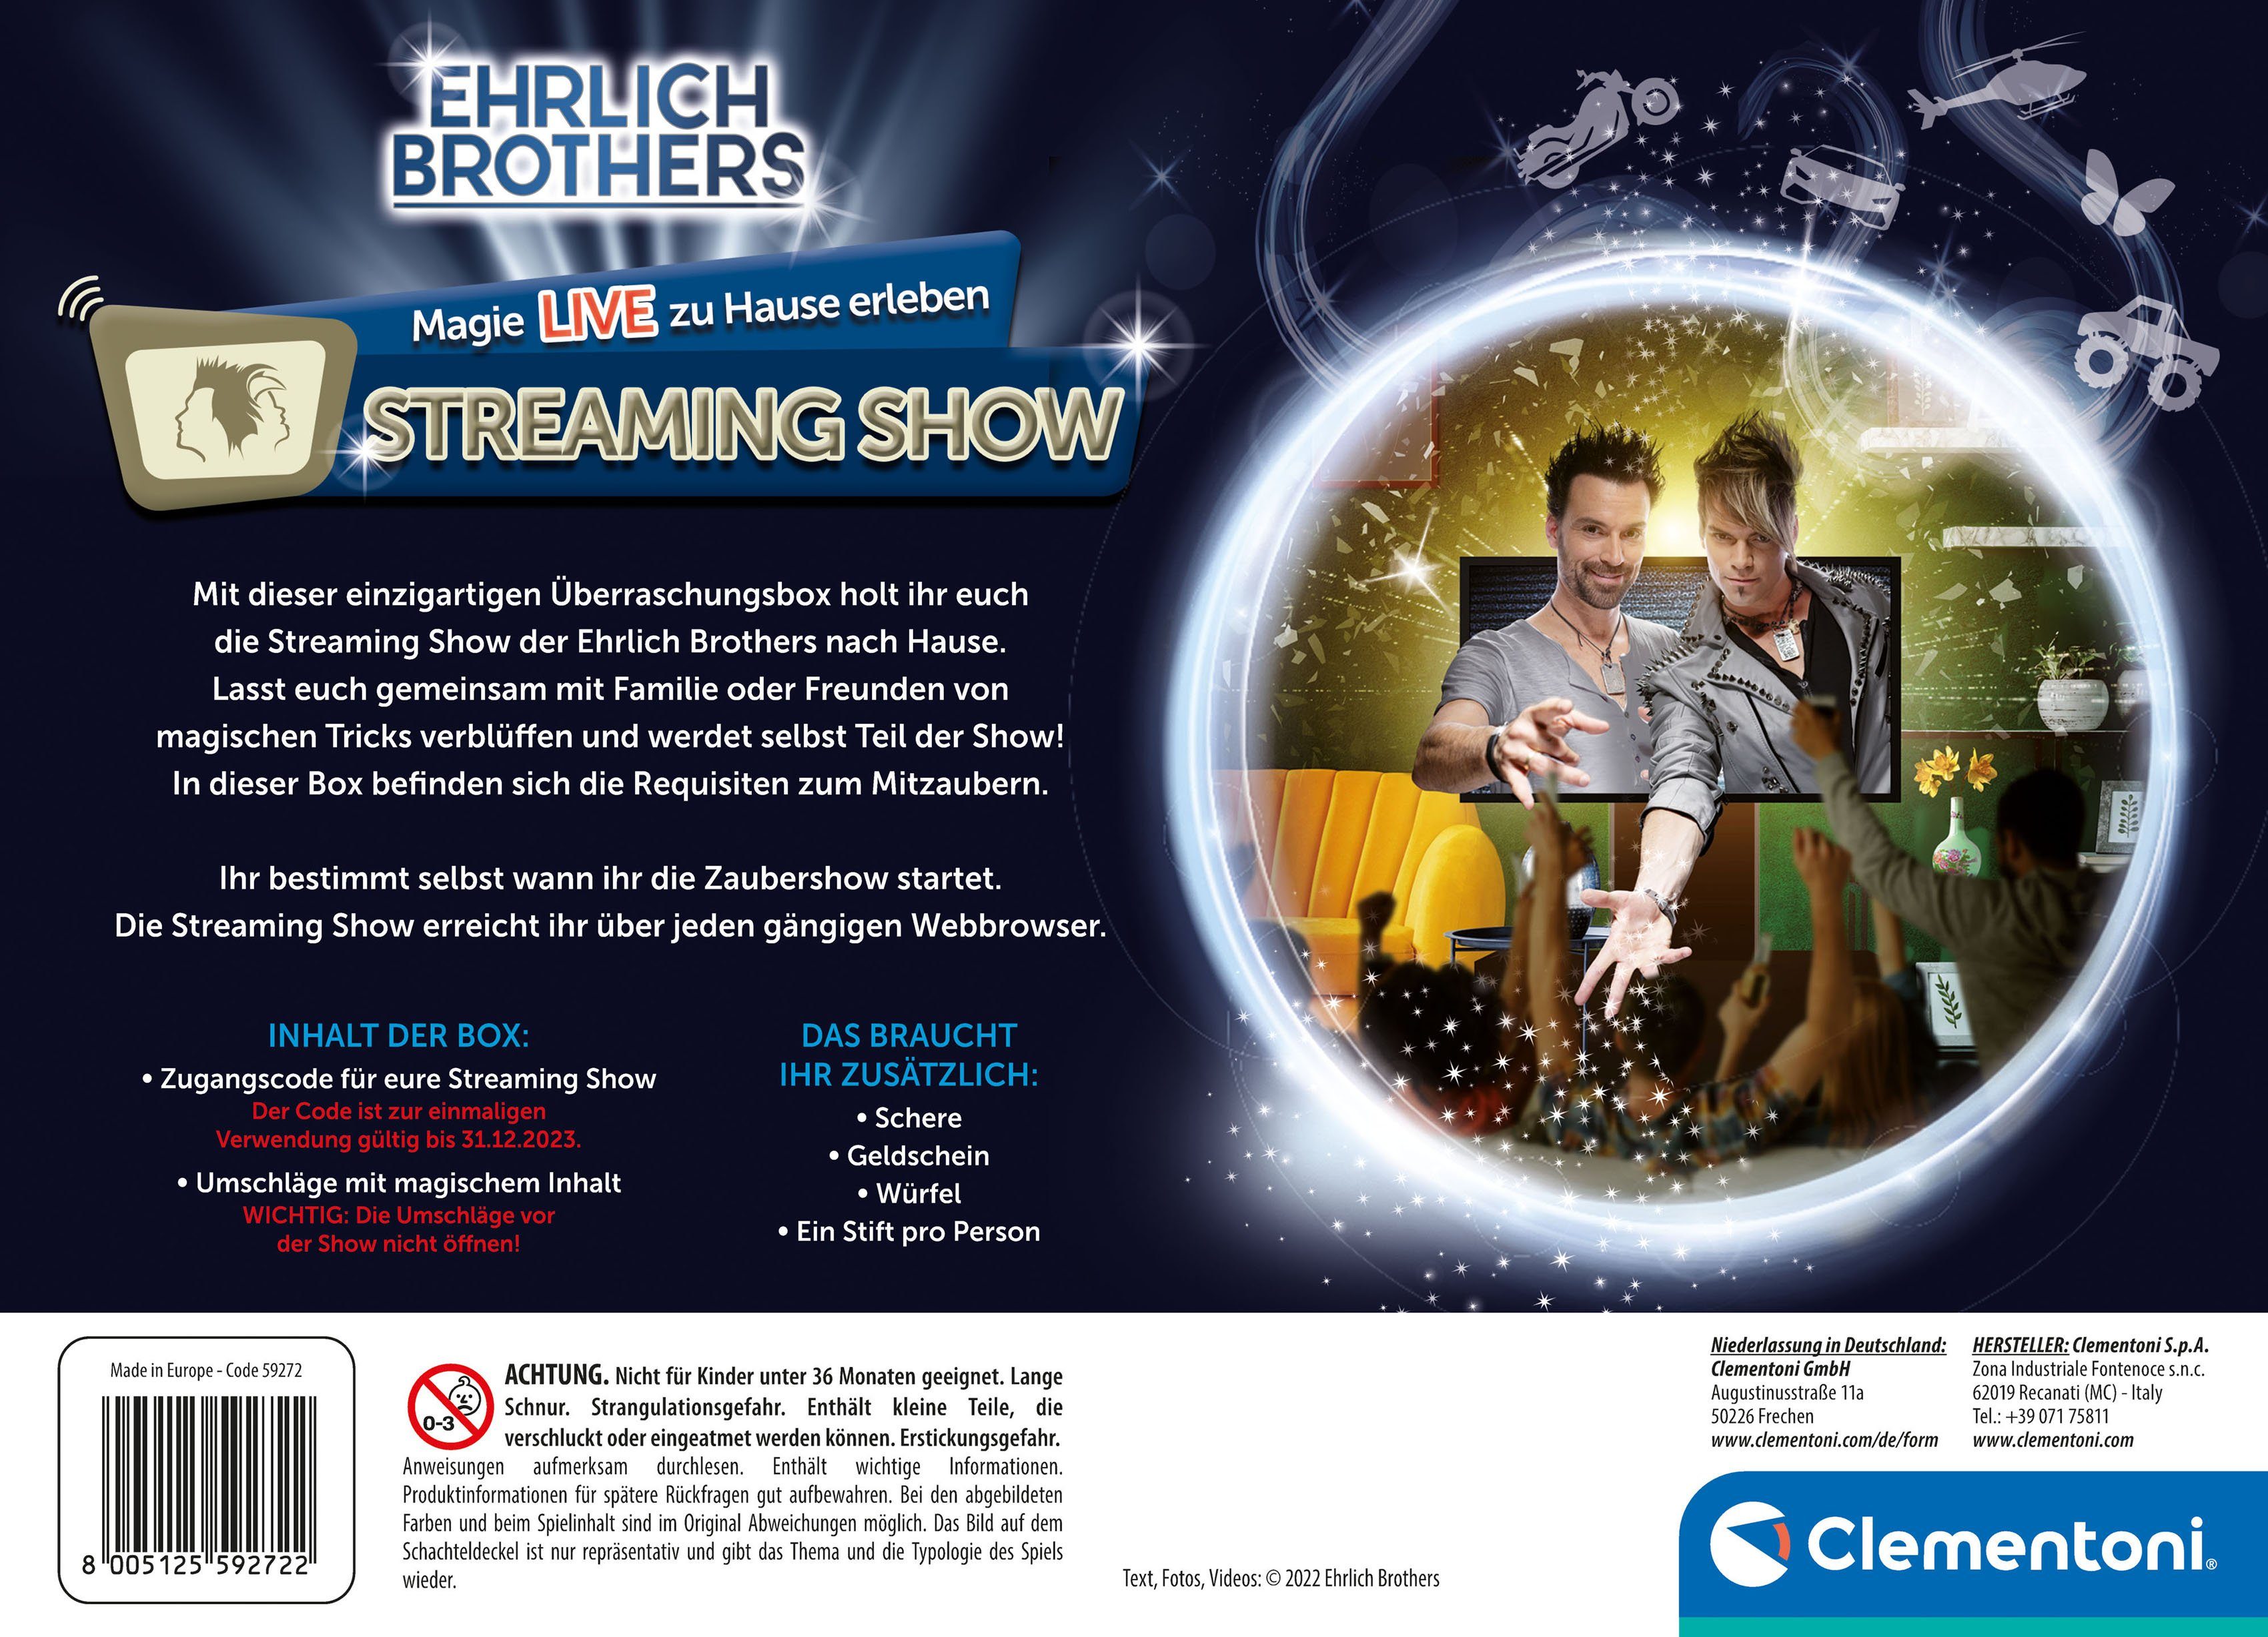 Ehrlich Zauberkasten Show, Europe Brothers, Made Streaming Vedes Clementoni® in